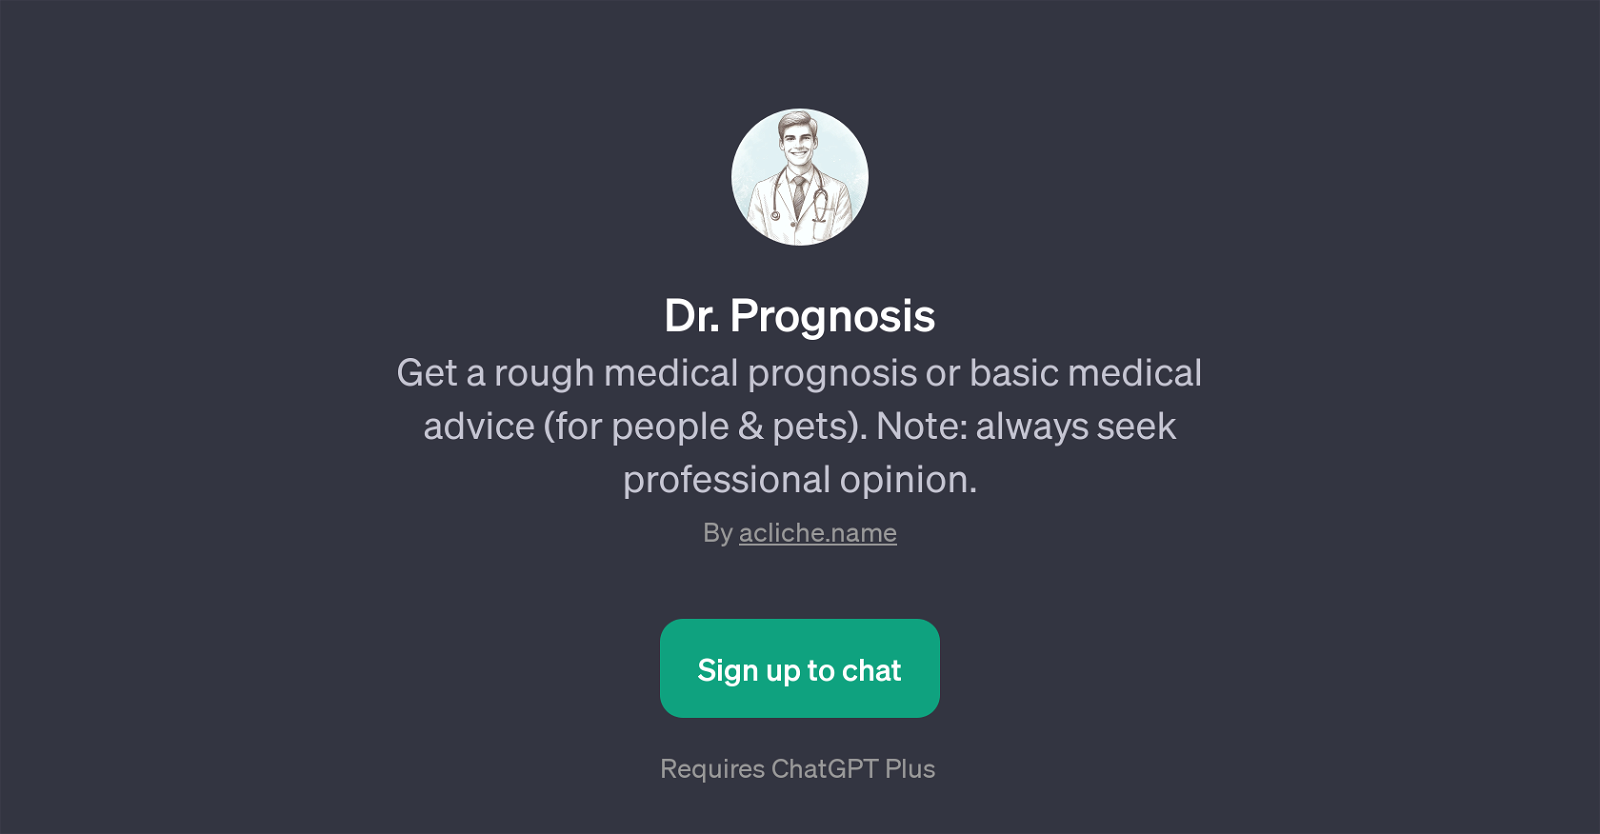 Dr. Prognosis website